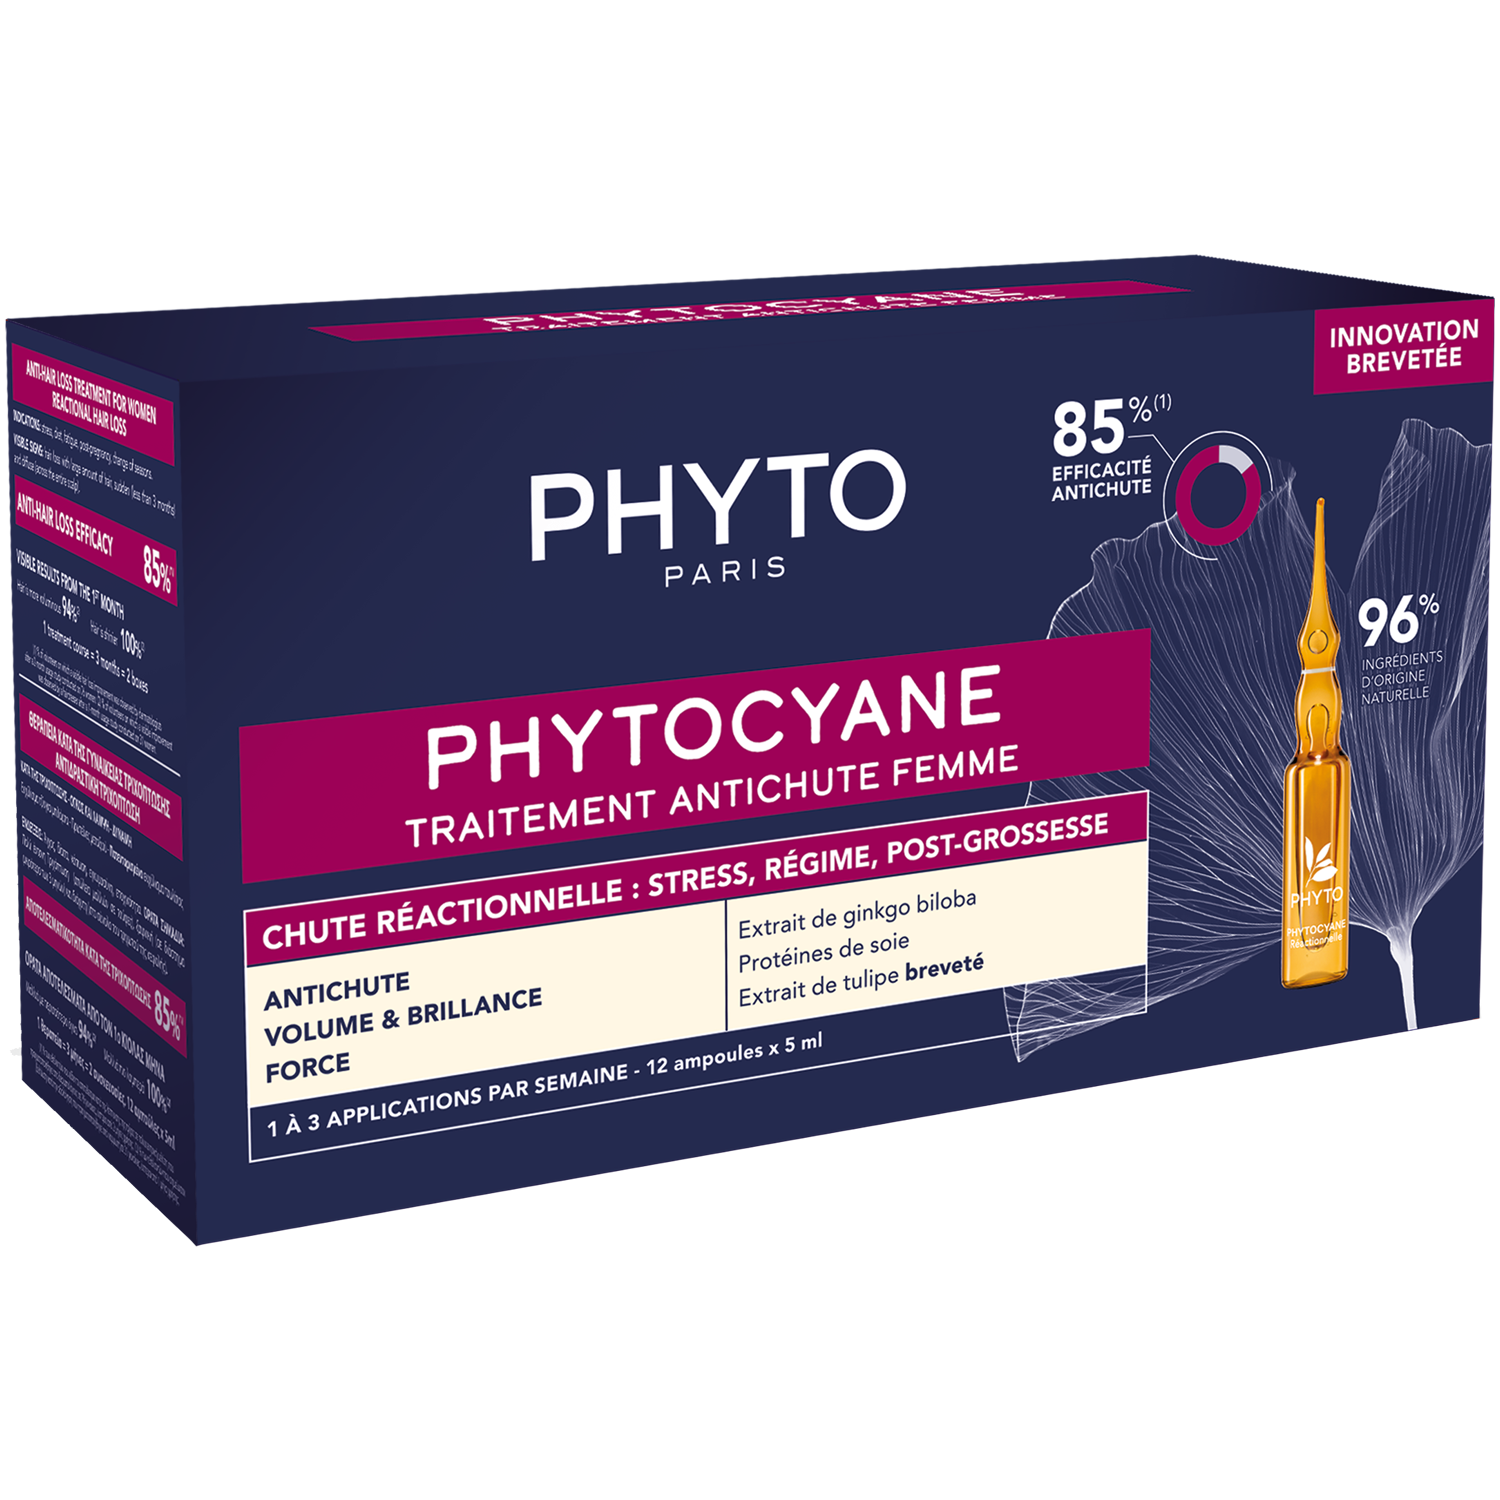 Phyto Phytocyane средство против выпадения волос для женщин, 60 мл phyto сыворотка против выпадения волос для женщин 12 ампул х 5 мл phyto phytocyane